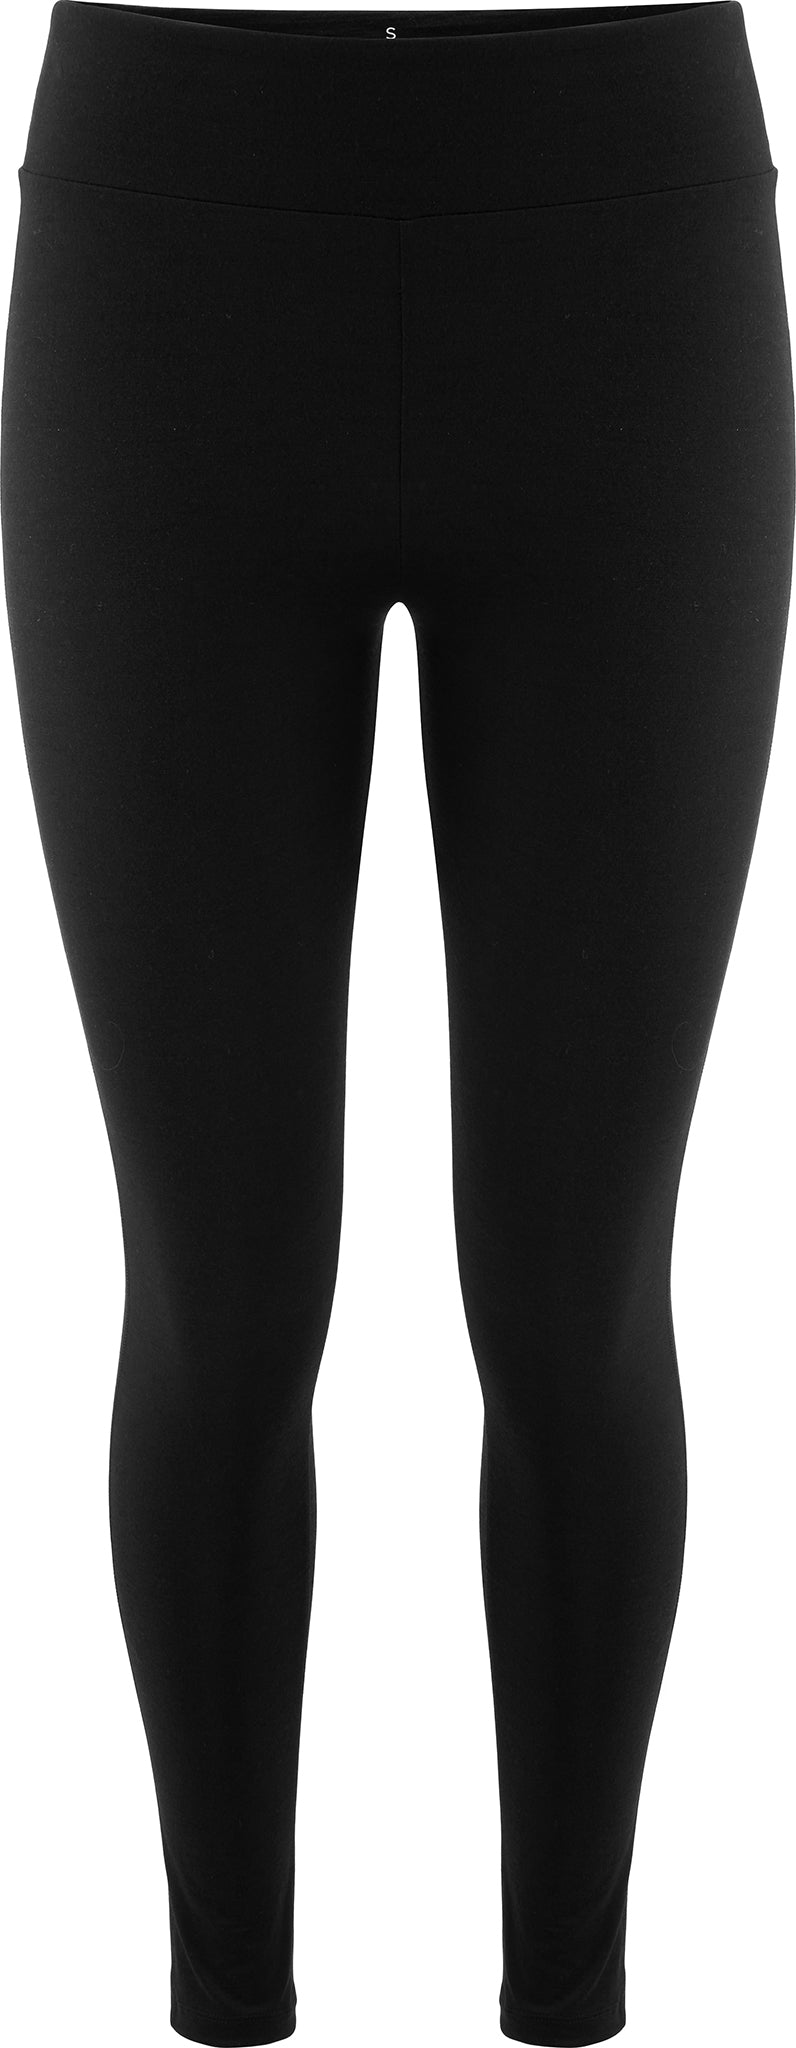 YOLIX 7 Pack Fleece Lined Leggings Women, Black Soft Thermal Warm Winter Workout  Athletic Yoga Leggings at  Women's Clothing store